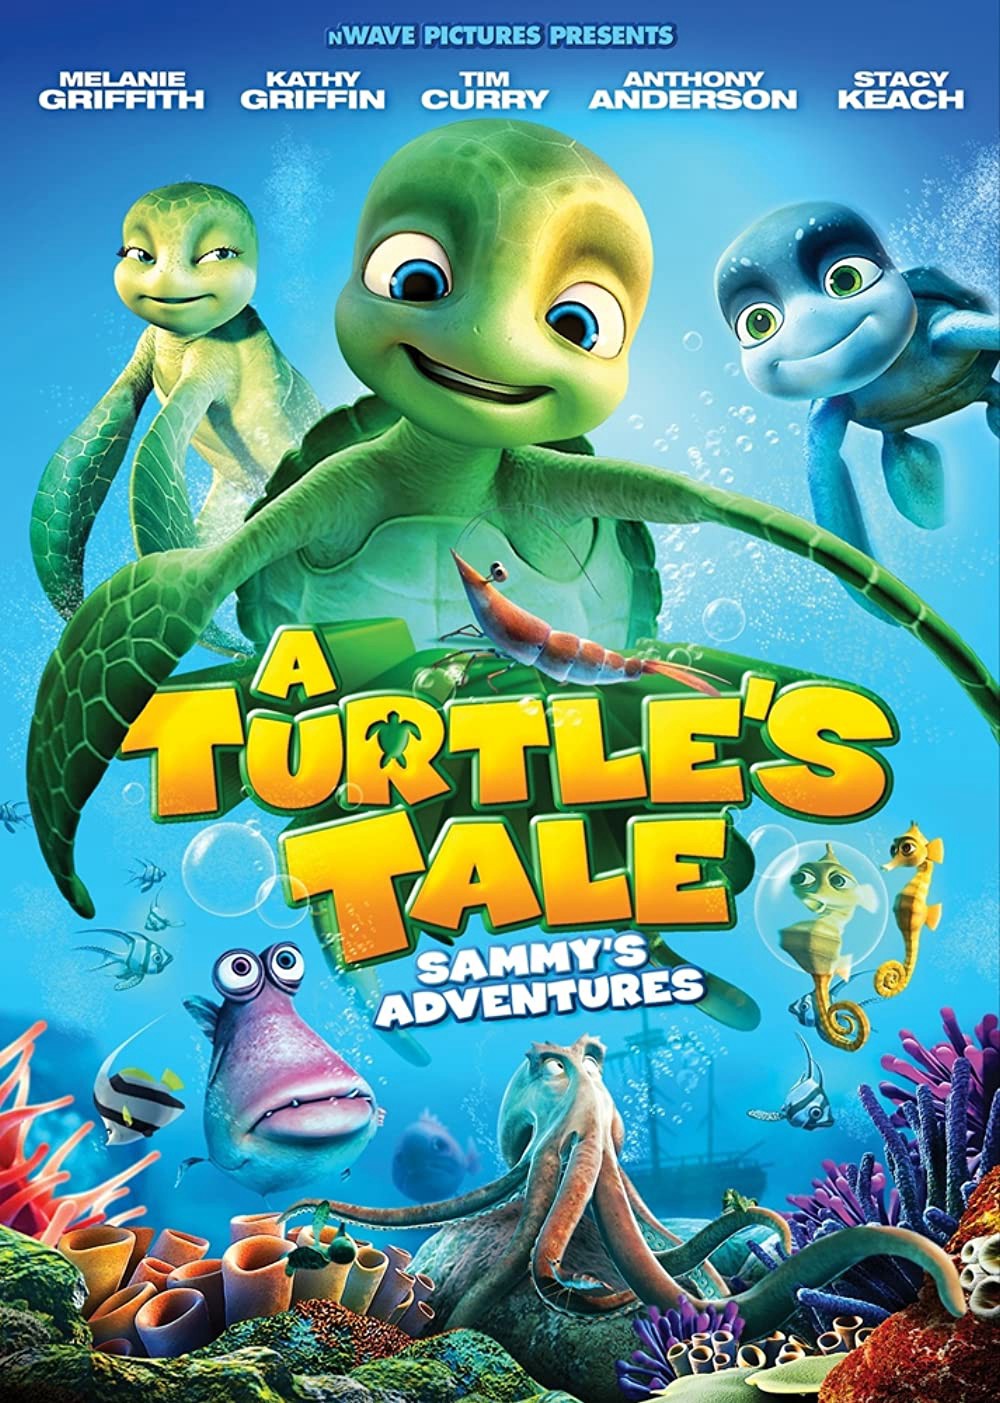 Cuộc Phiêu Lưu Của Sammy | A Turtle's Tale: Sammy's Adventures (2010)